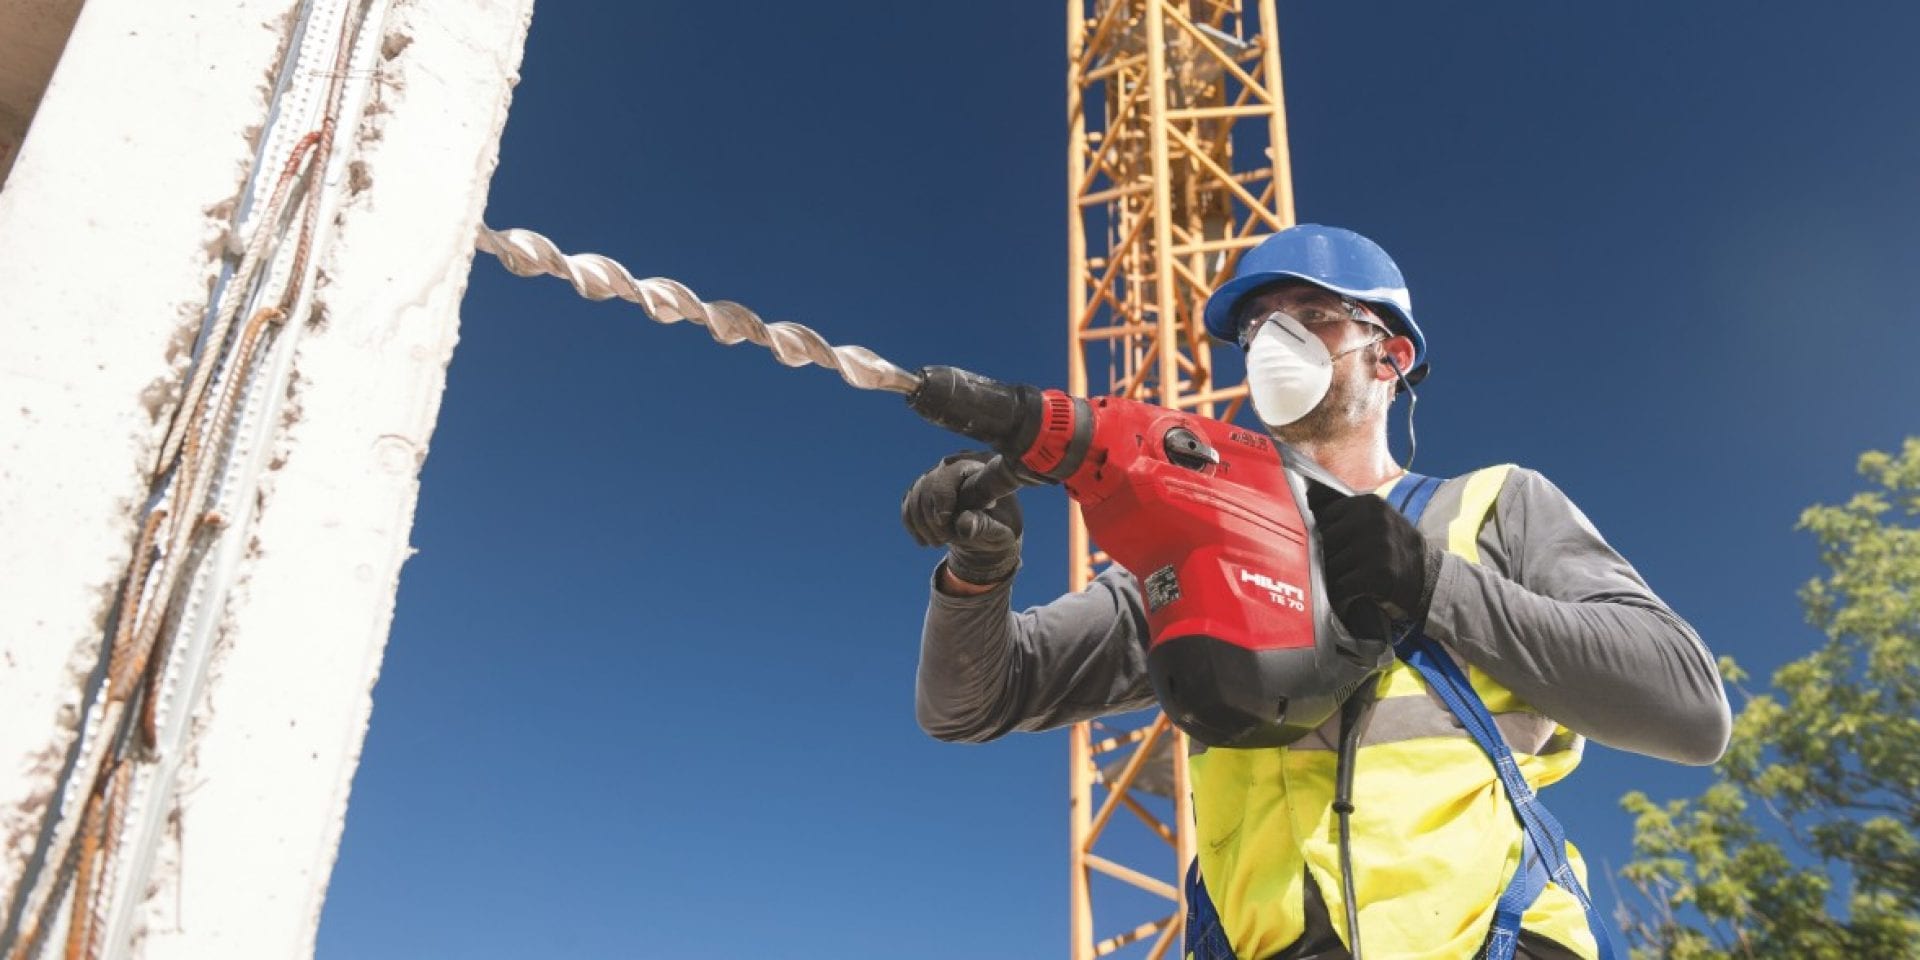 Hilti drilling and demolition training